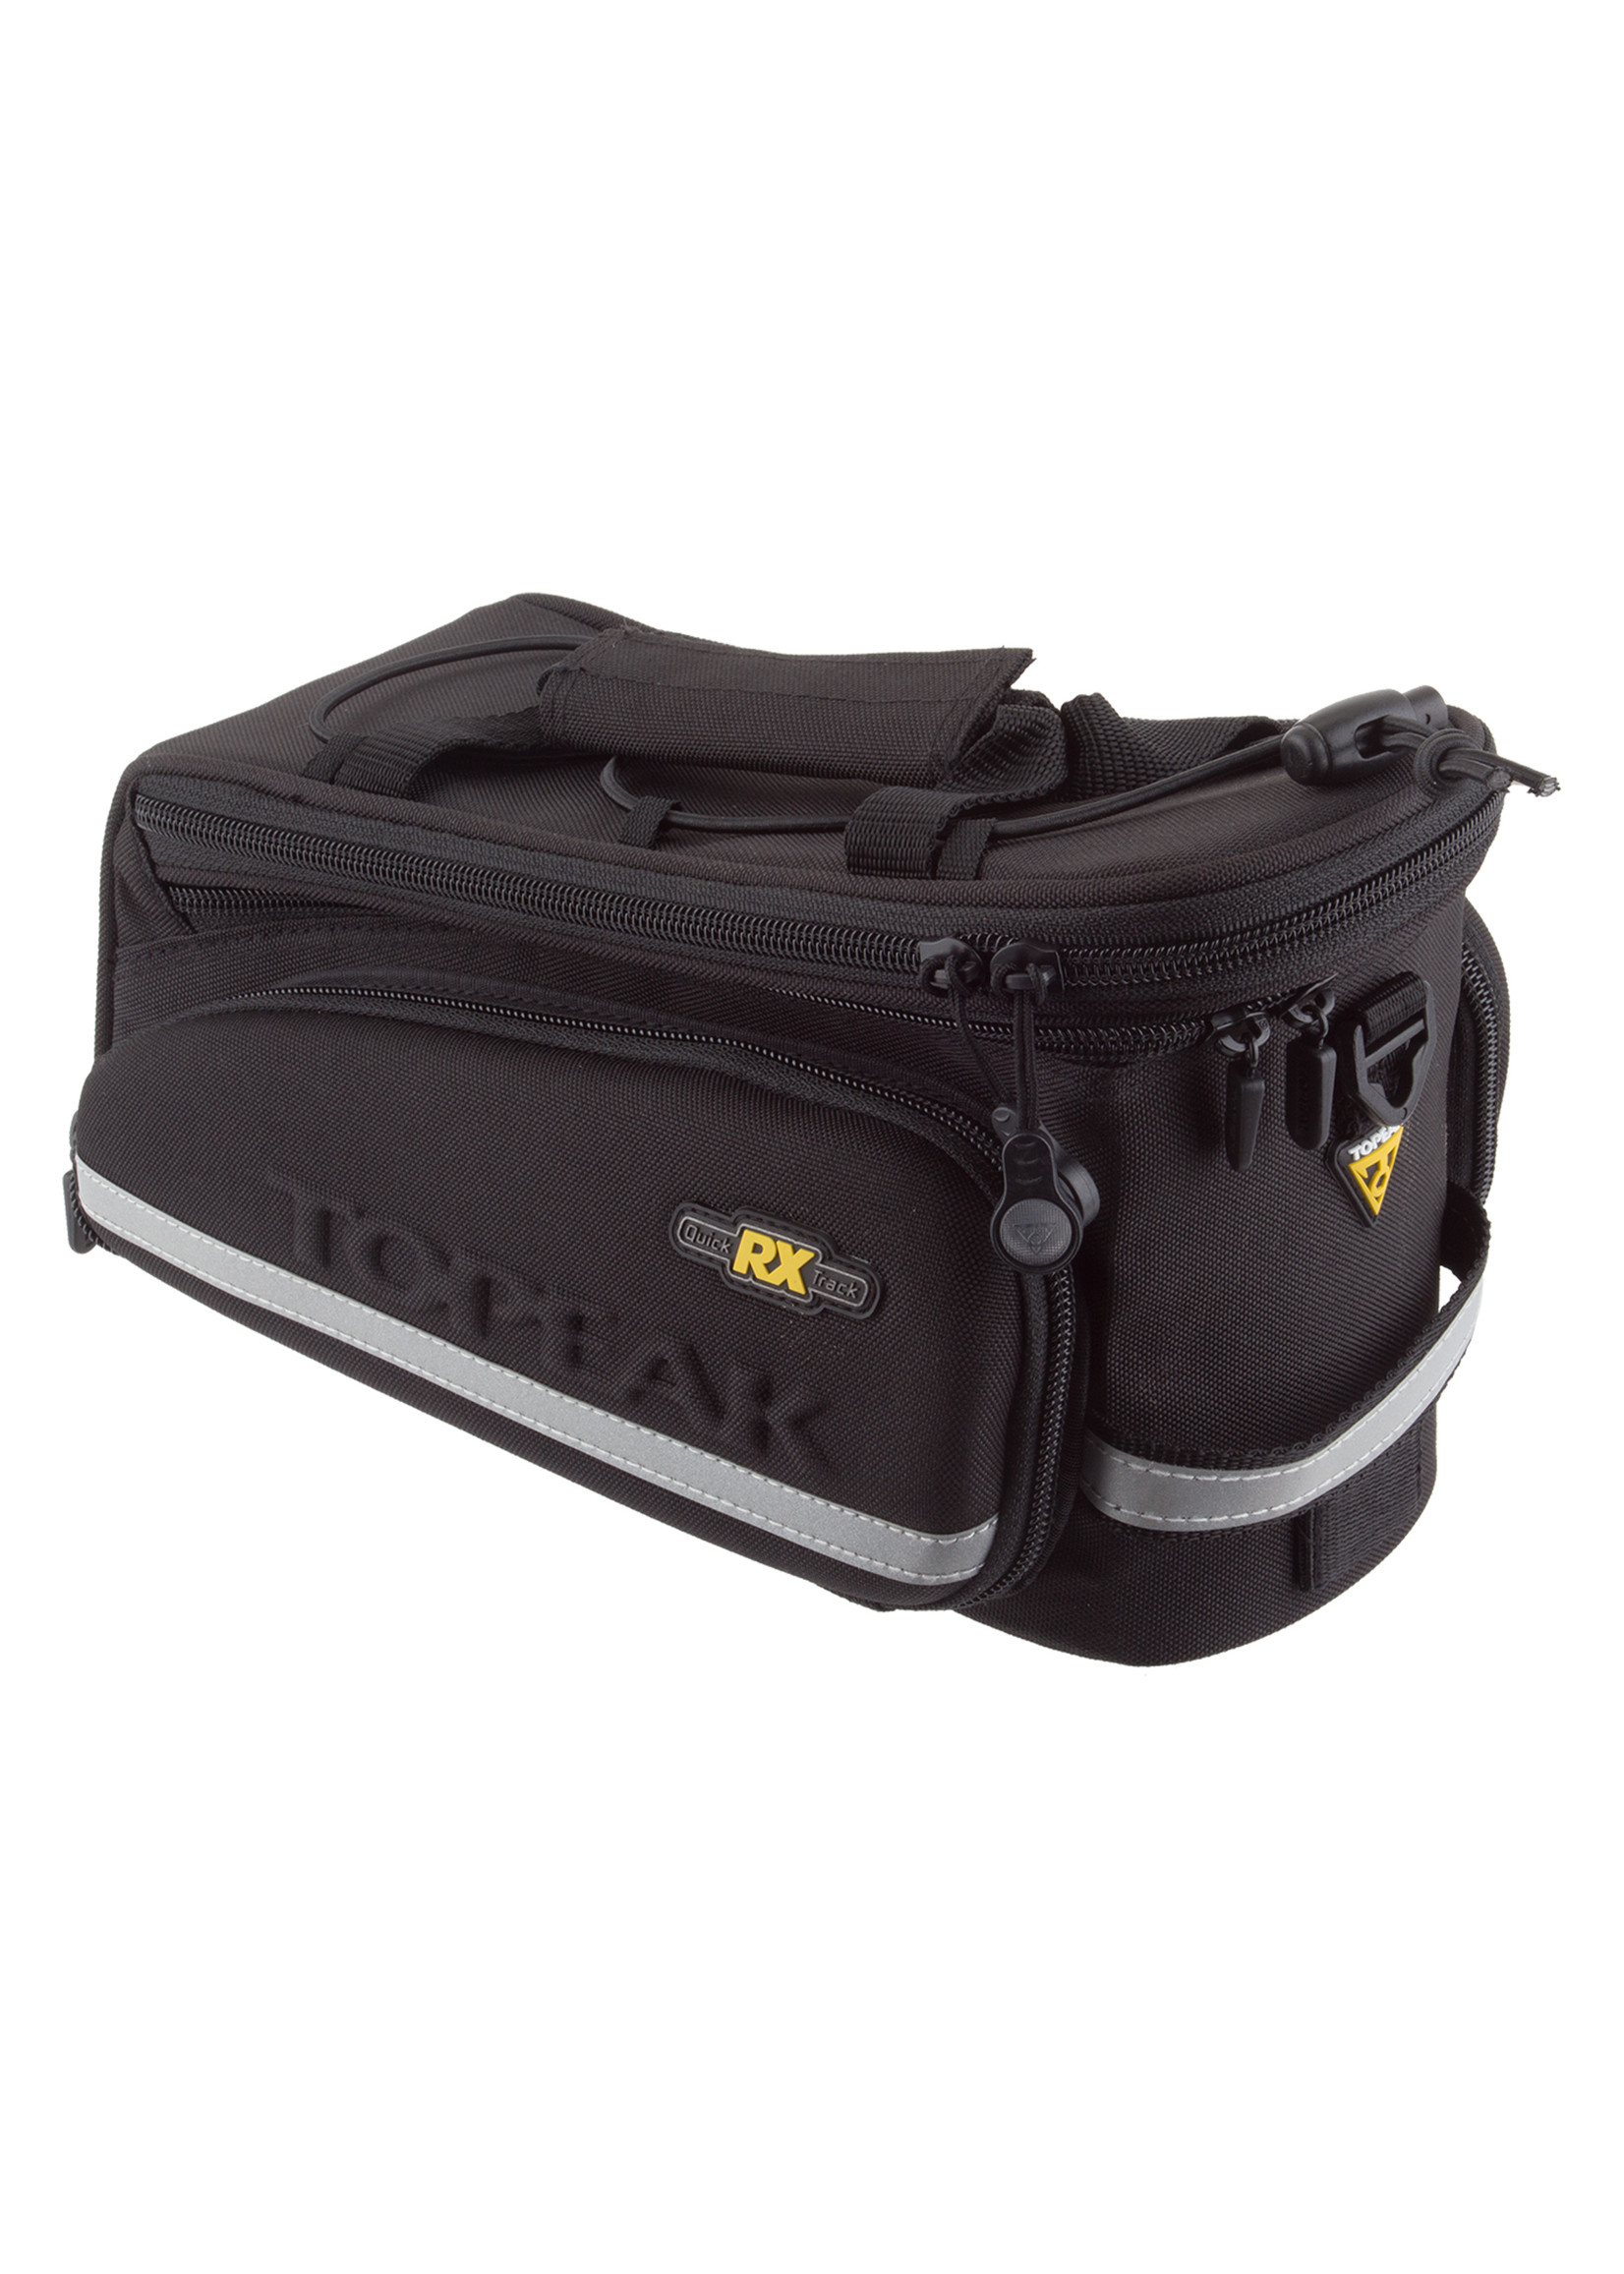 Topeak Topeak RX Trunk Bag DXP with Panniers